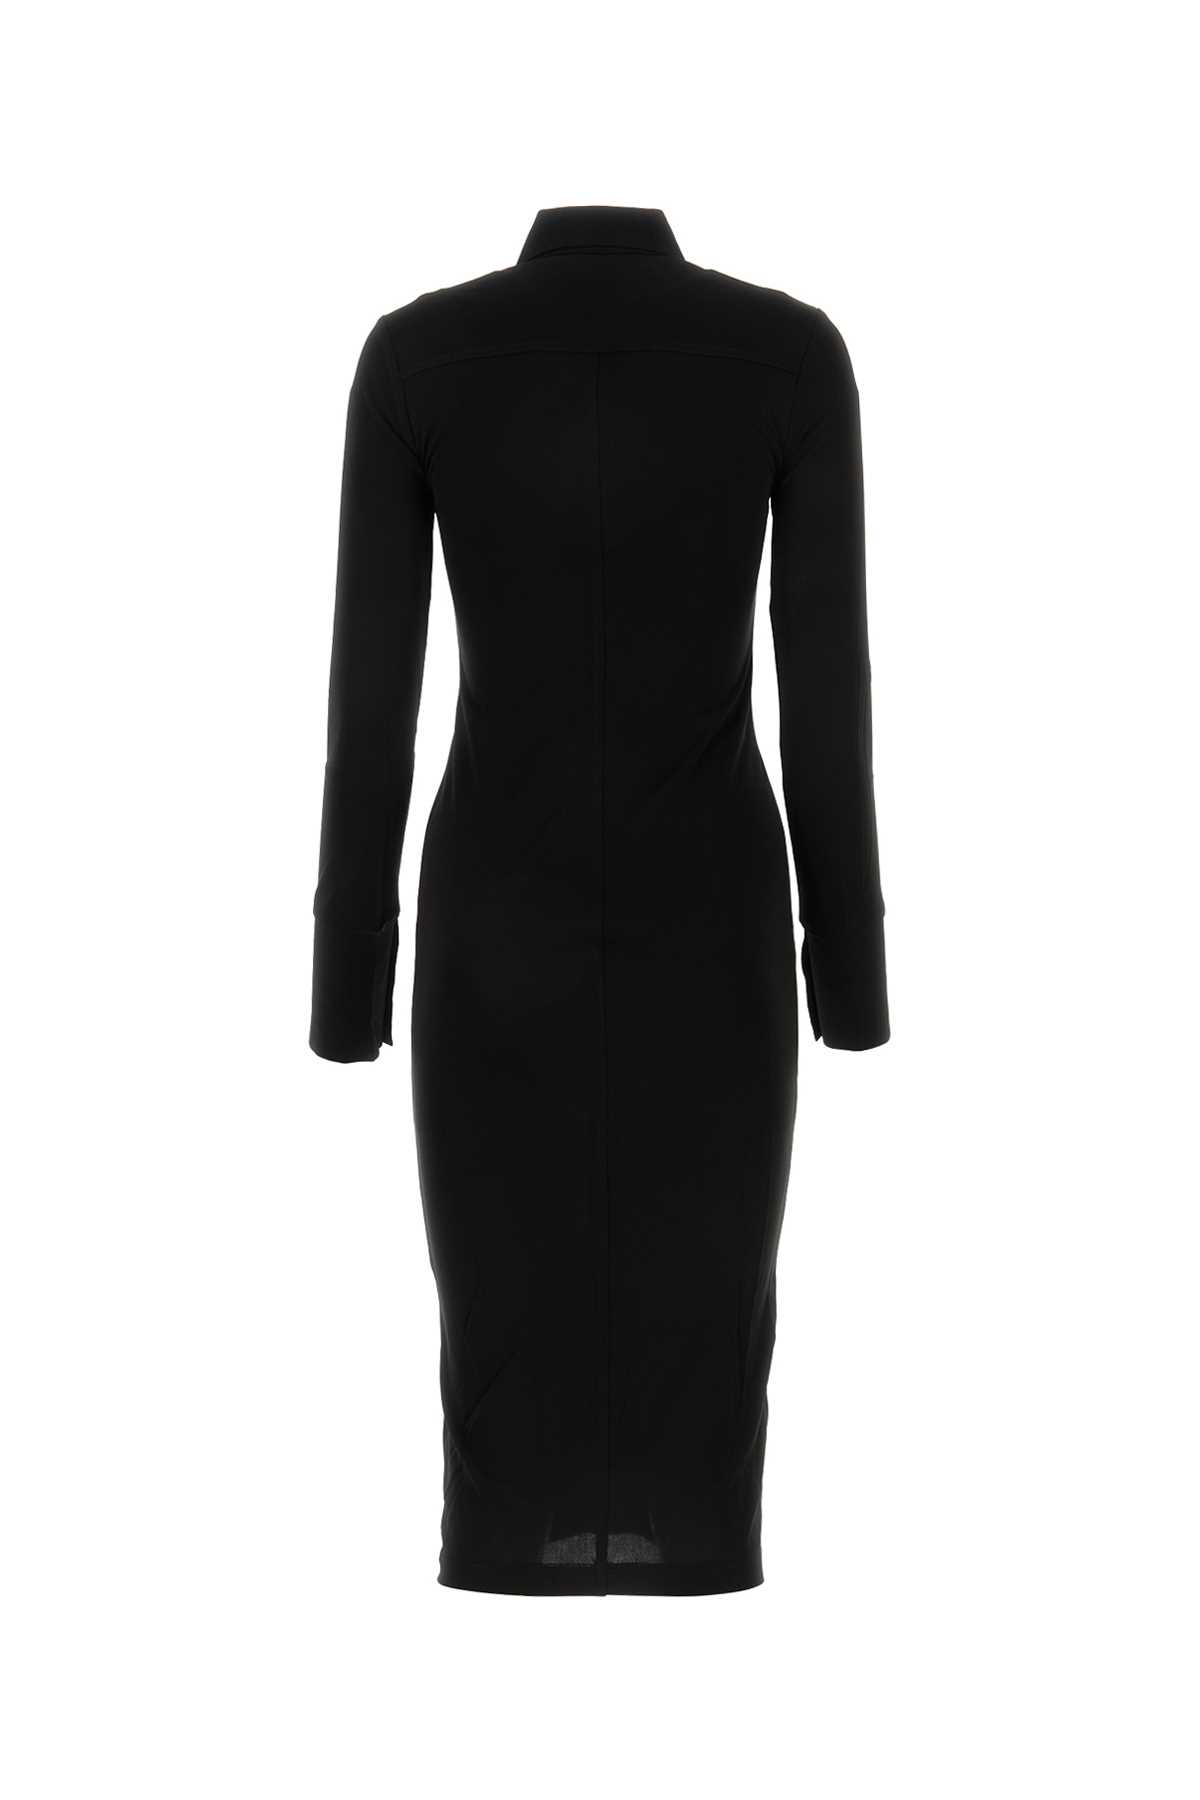 Shop Helmut Lang Black Viscose Shirt Dress